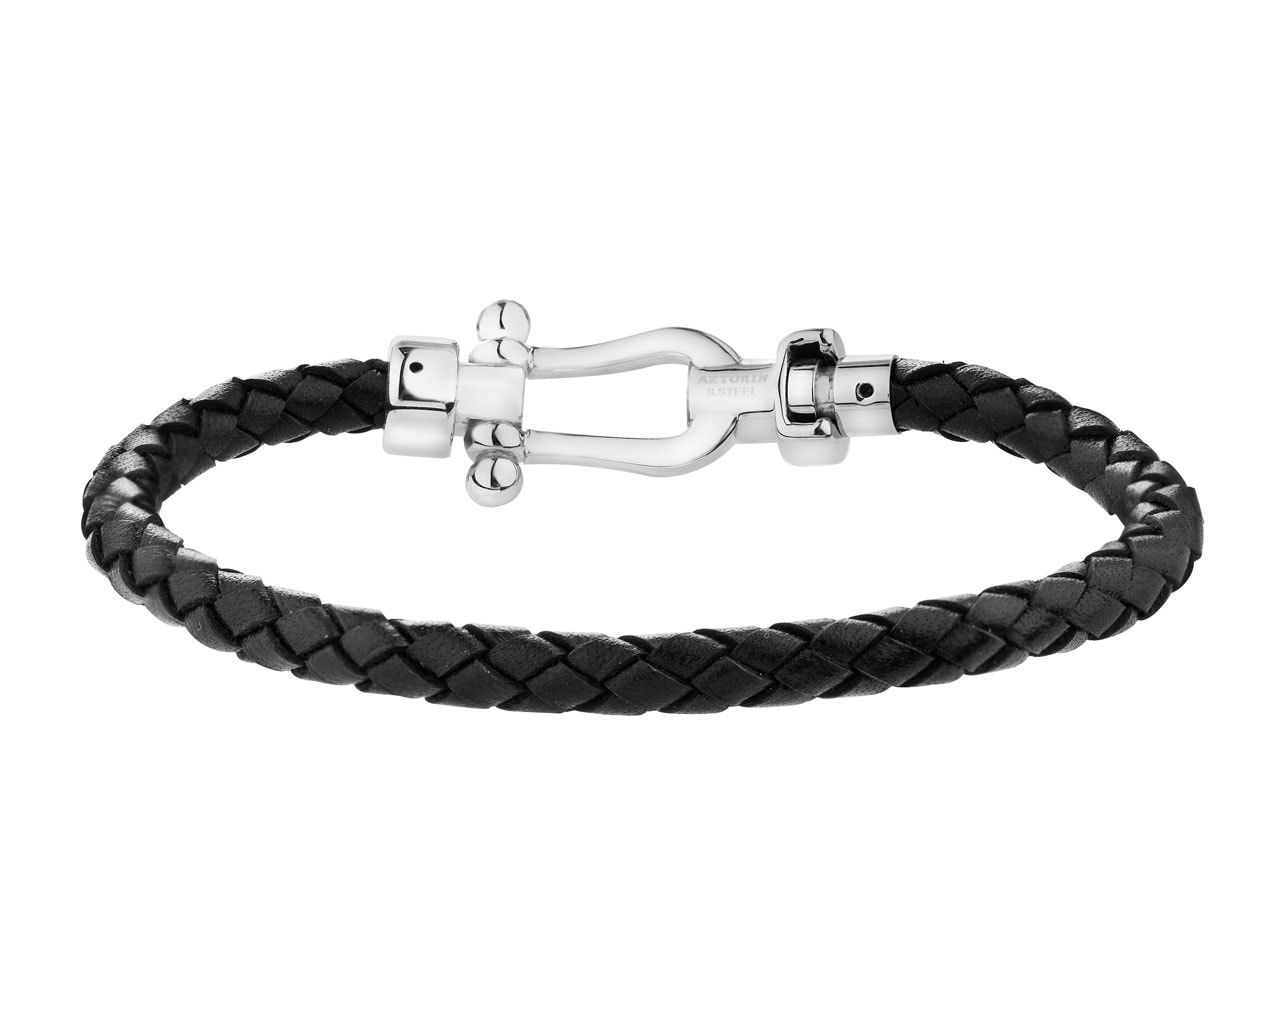 Stainless Steel Bracelet - Ref No AZ525-6183 / Apart